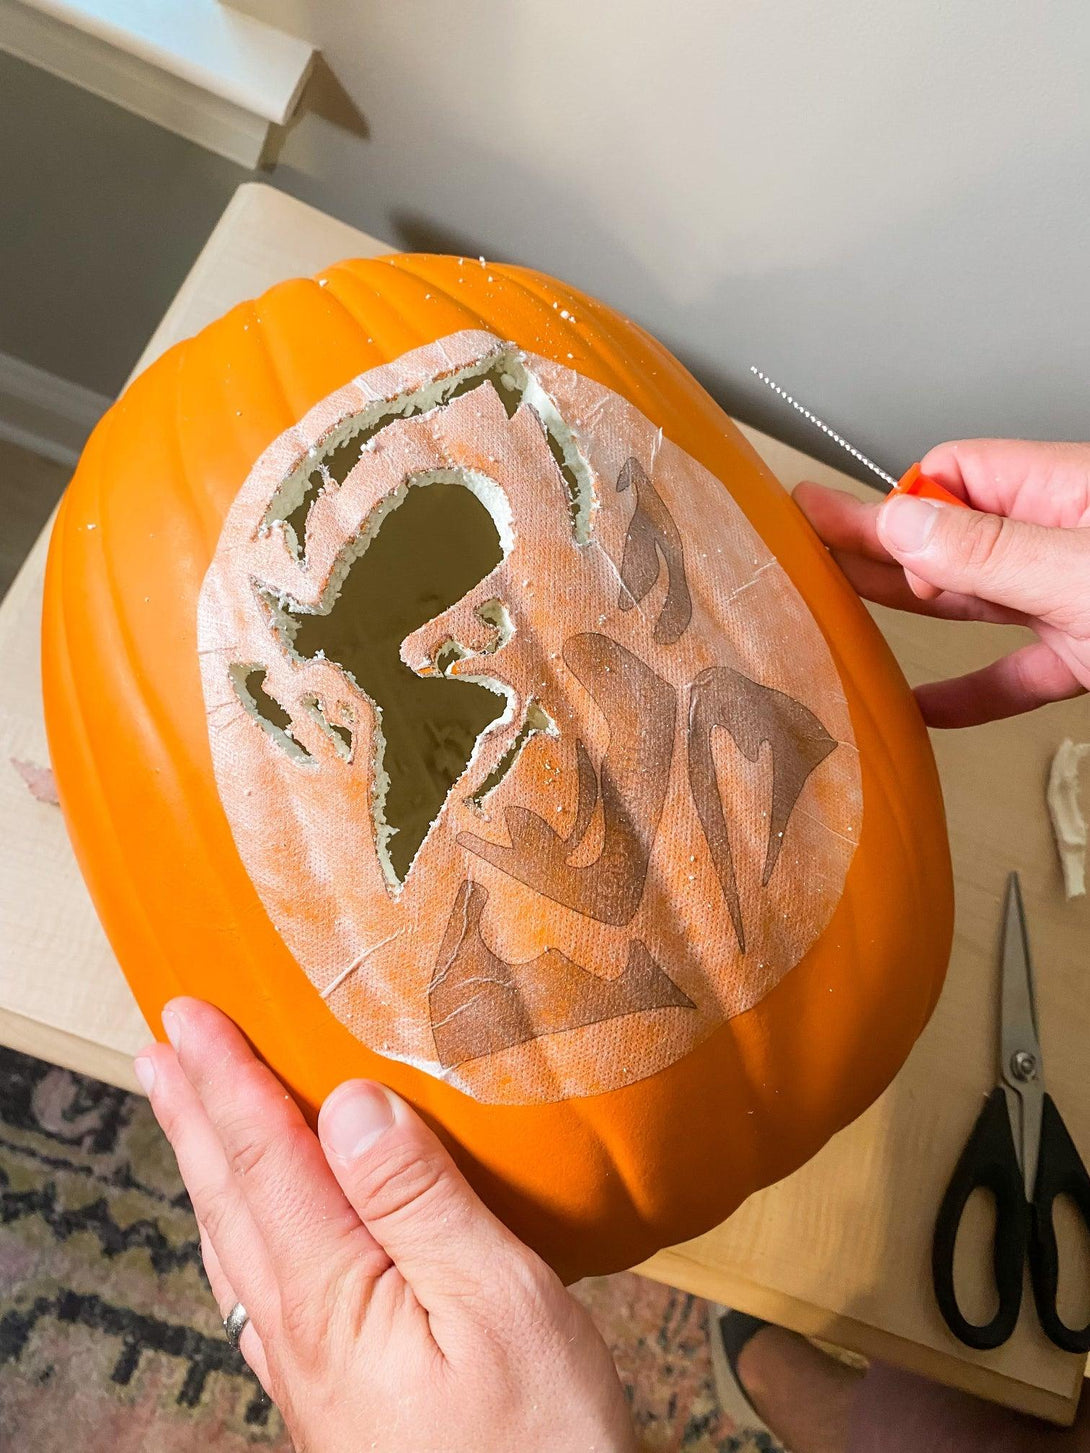 I Heart GA Pumpkin Carving Stencil - Pumpkin HQ